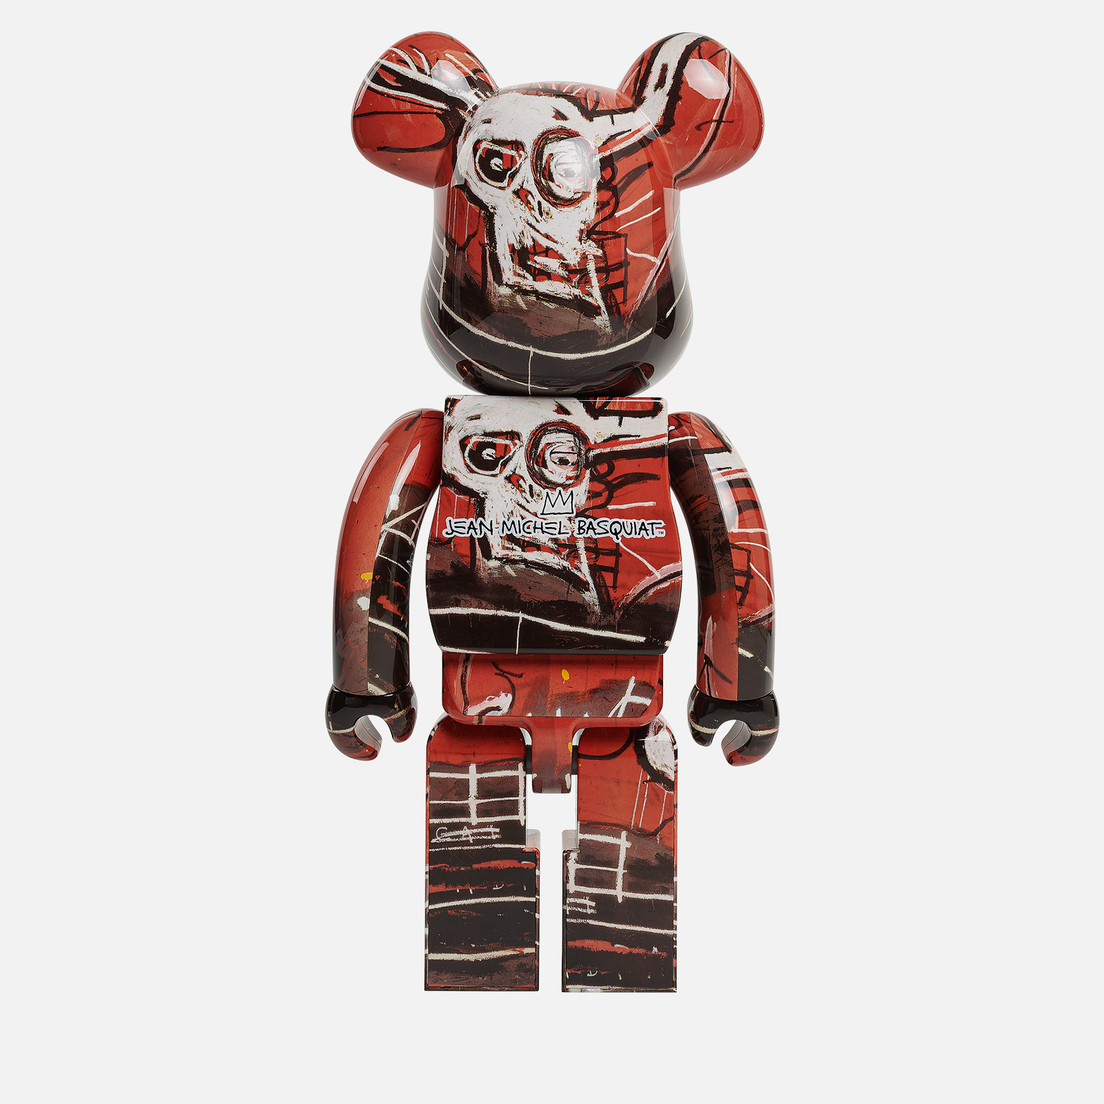 Medicom Toy Игрушка Jean-Michel Basquiat Ver. 5 1000%